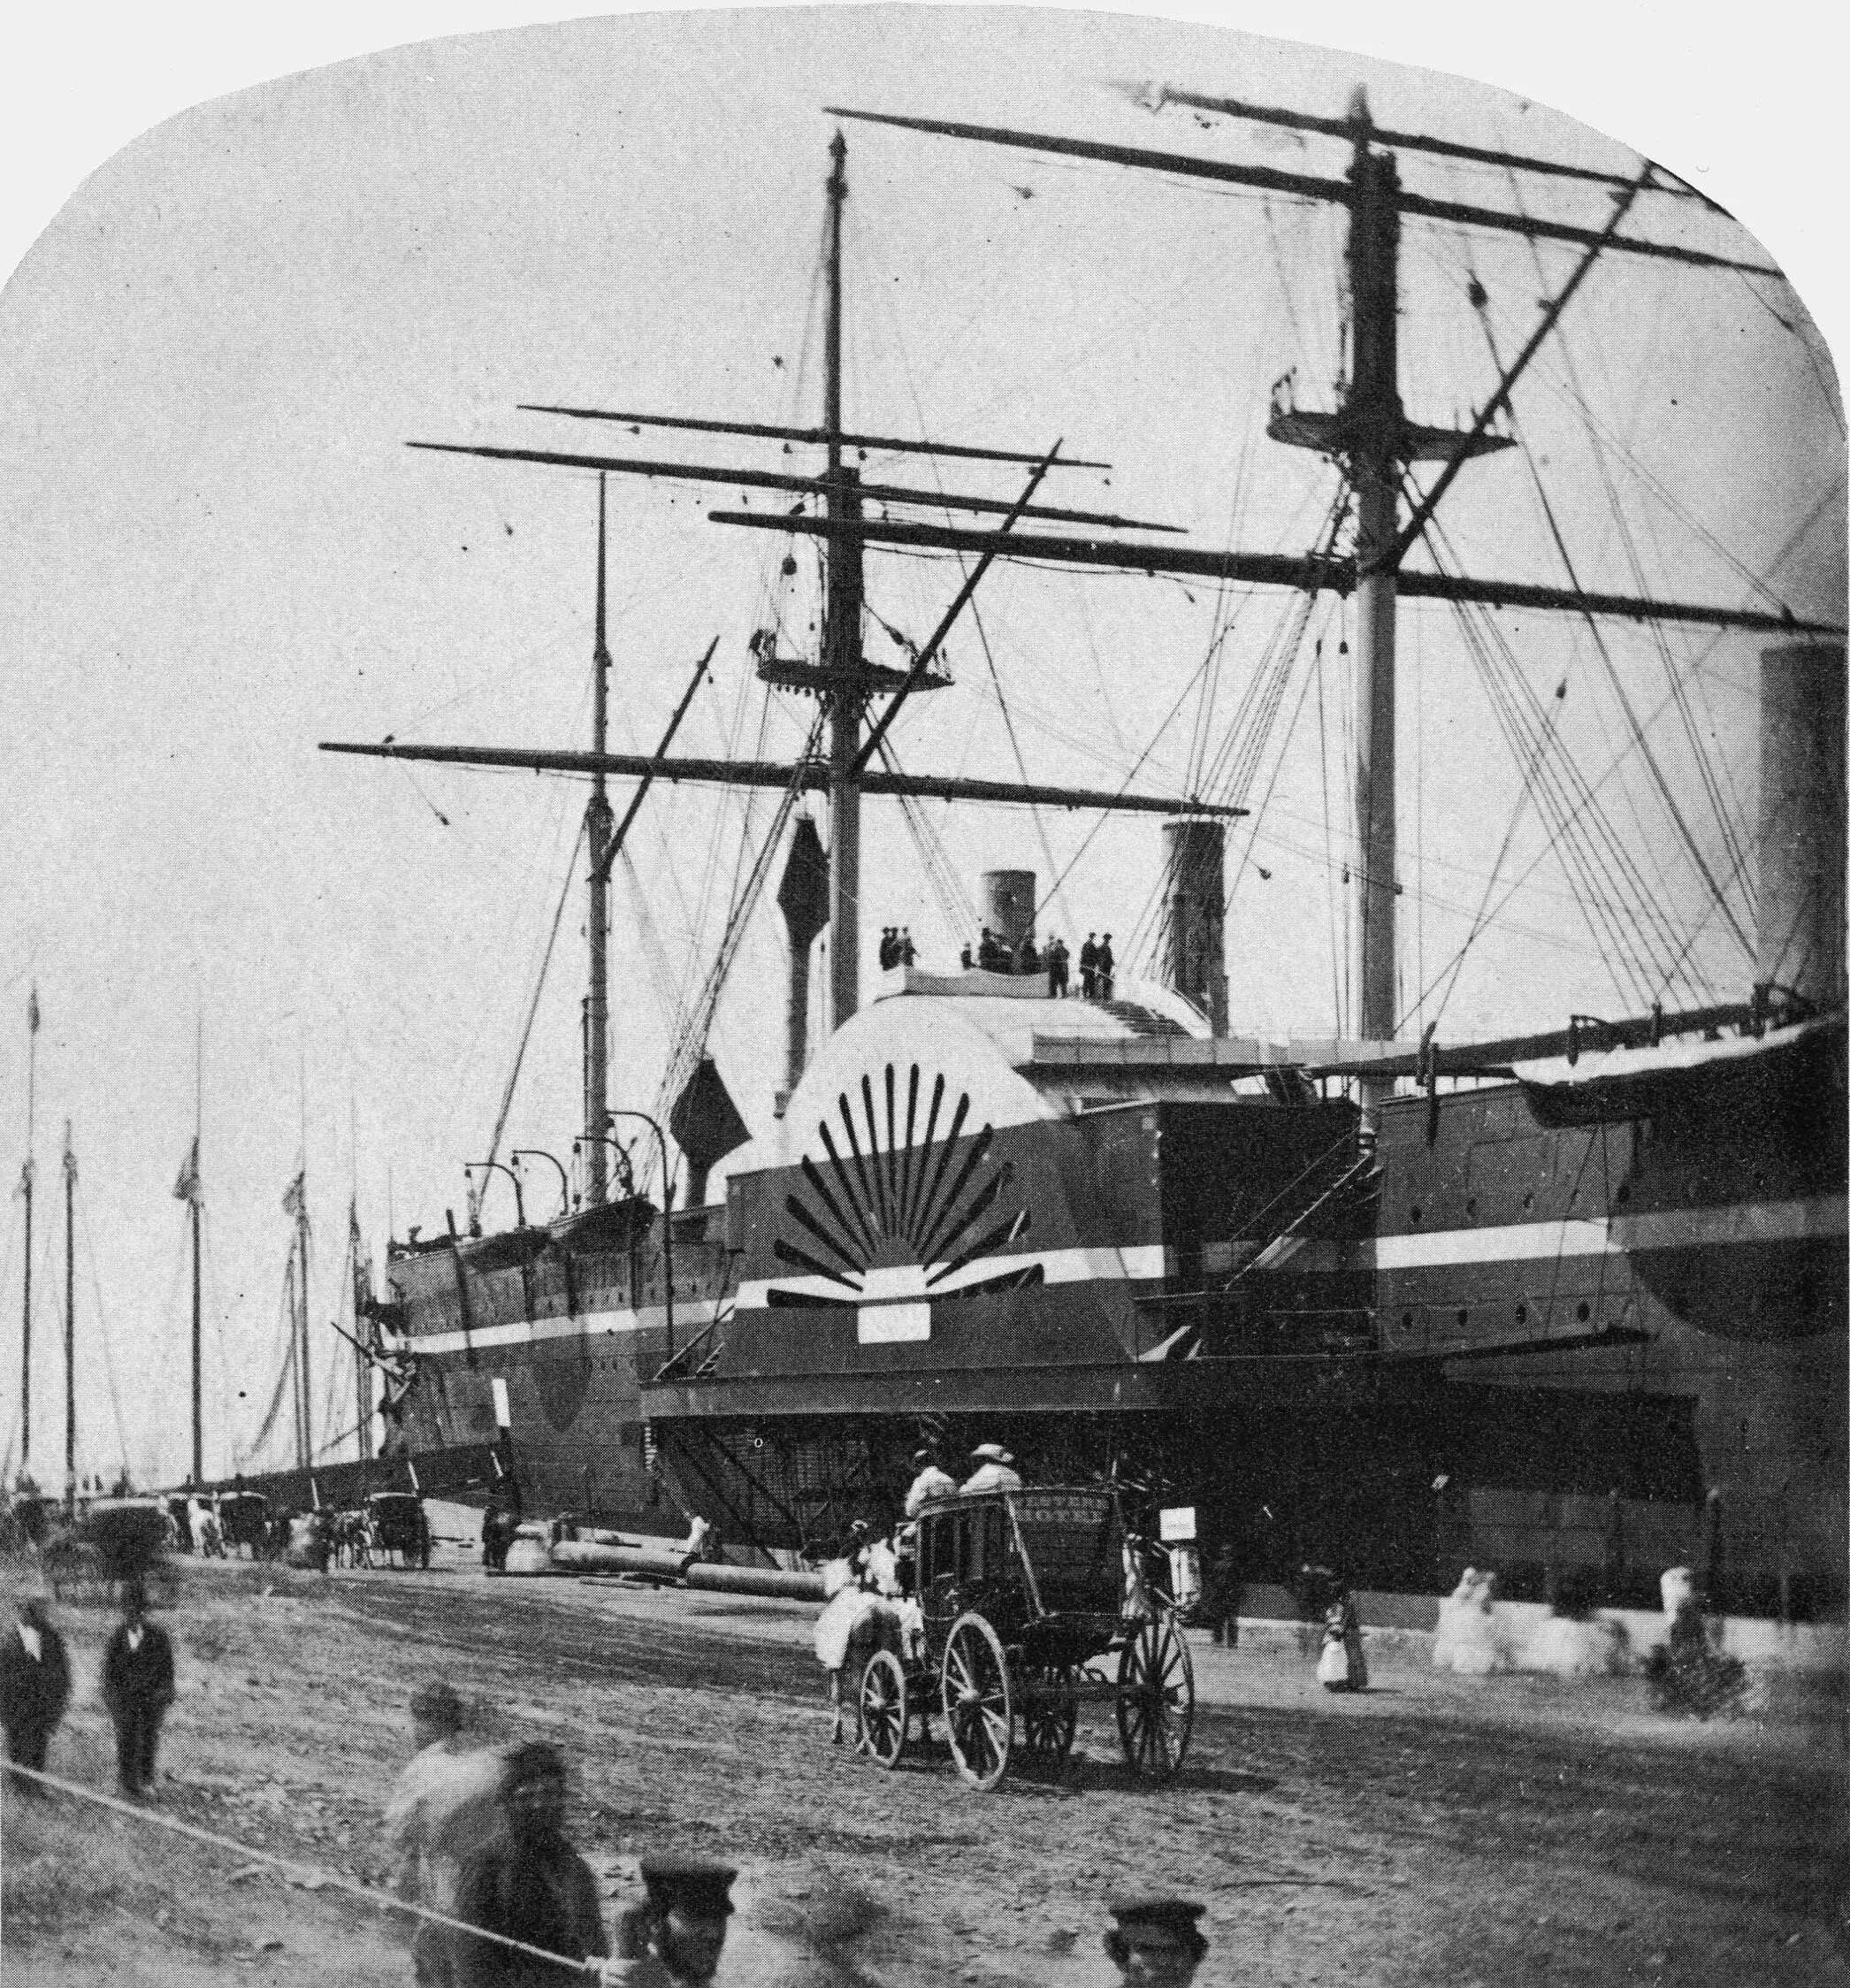 Грейт истерн. Пароход great Eastern. SS great Eastern, 1860. Грейт Истерн корабль. Пароходы 19 века Англия.